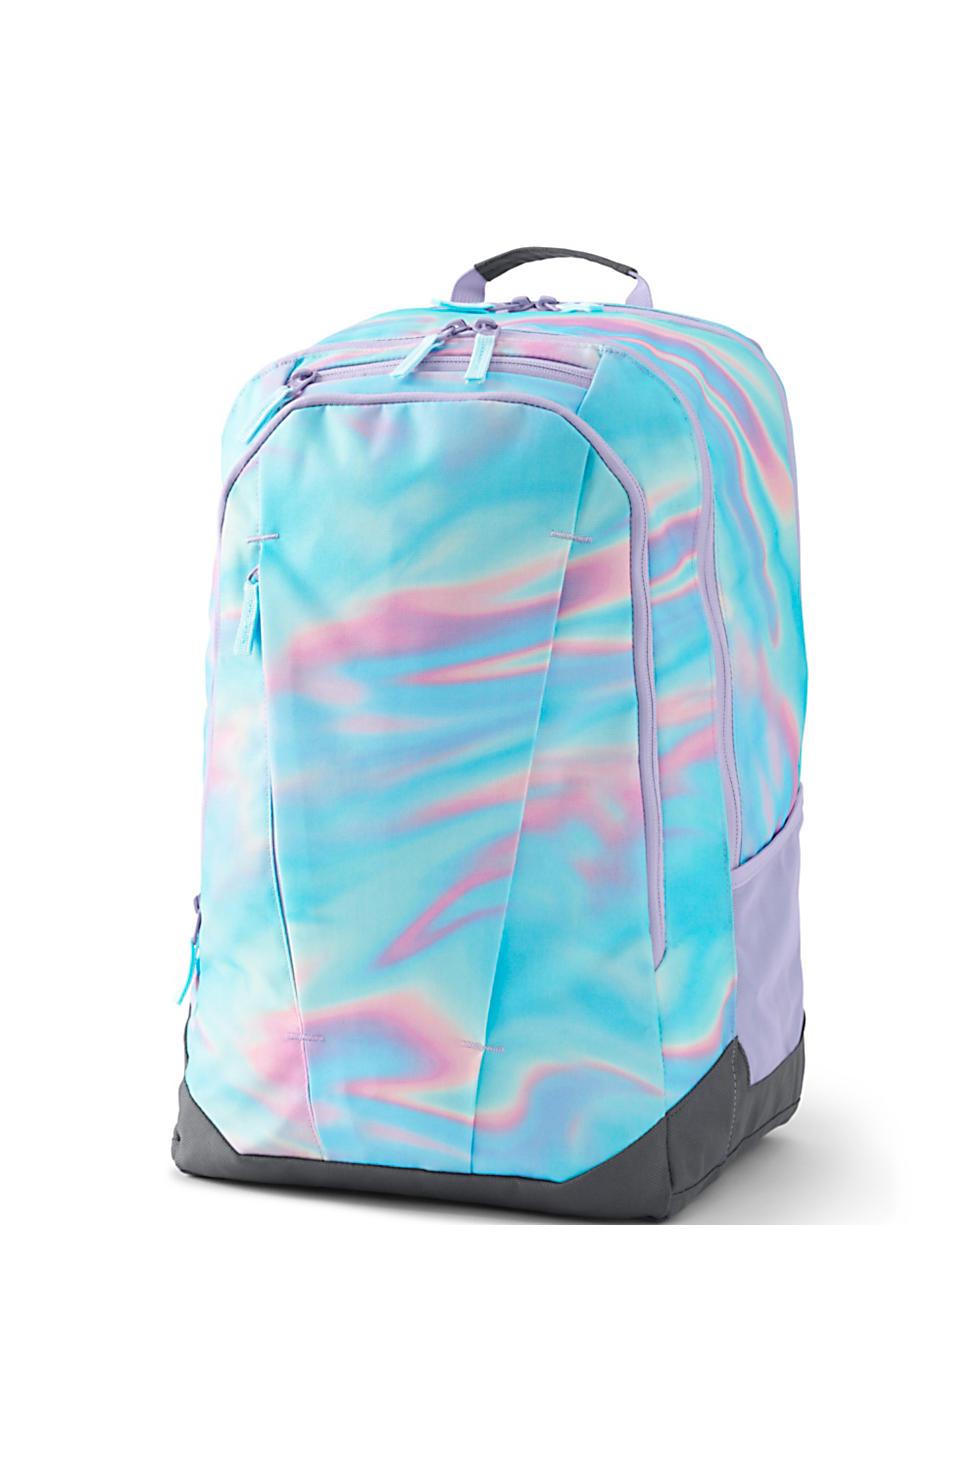 Lands End Kids TechPack Extra Large Backpack (various color options)